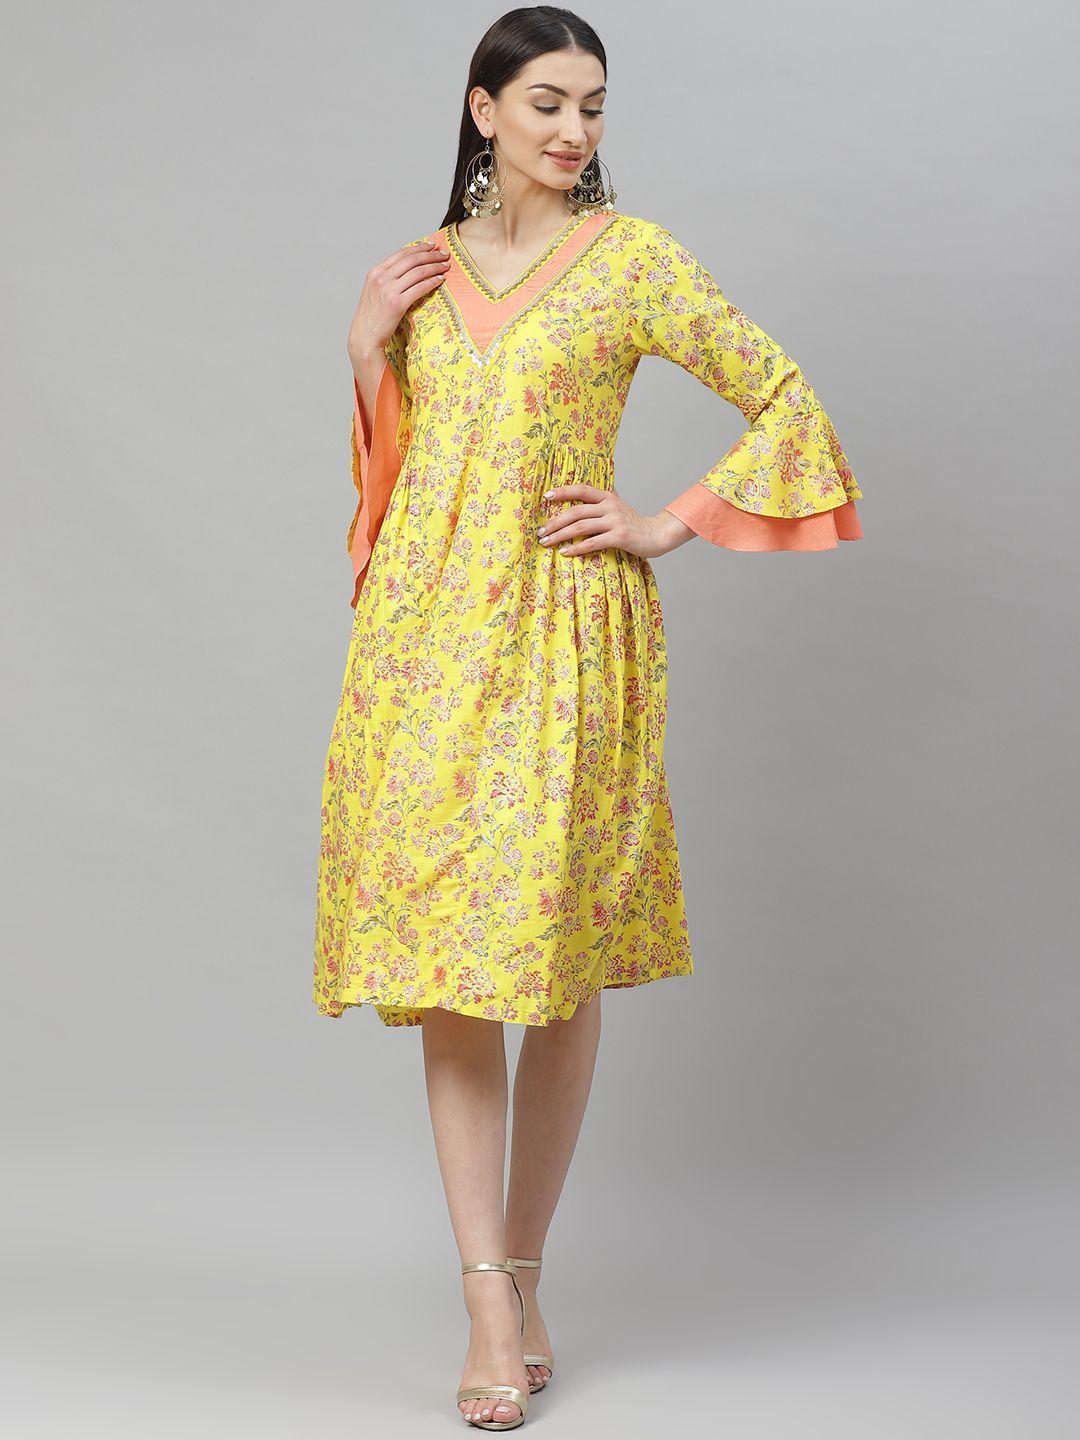 myshka women yellow and coral orange floral print a-line dress